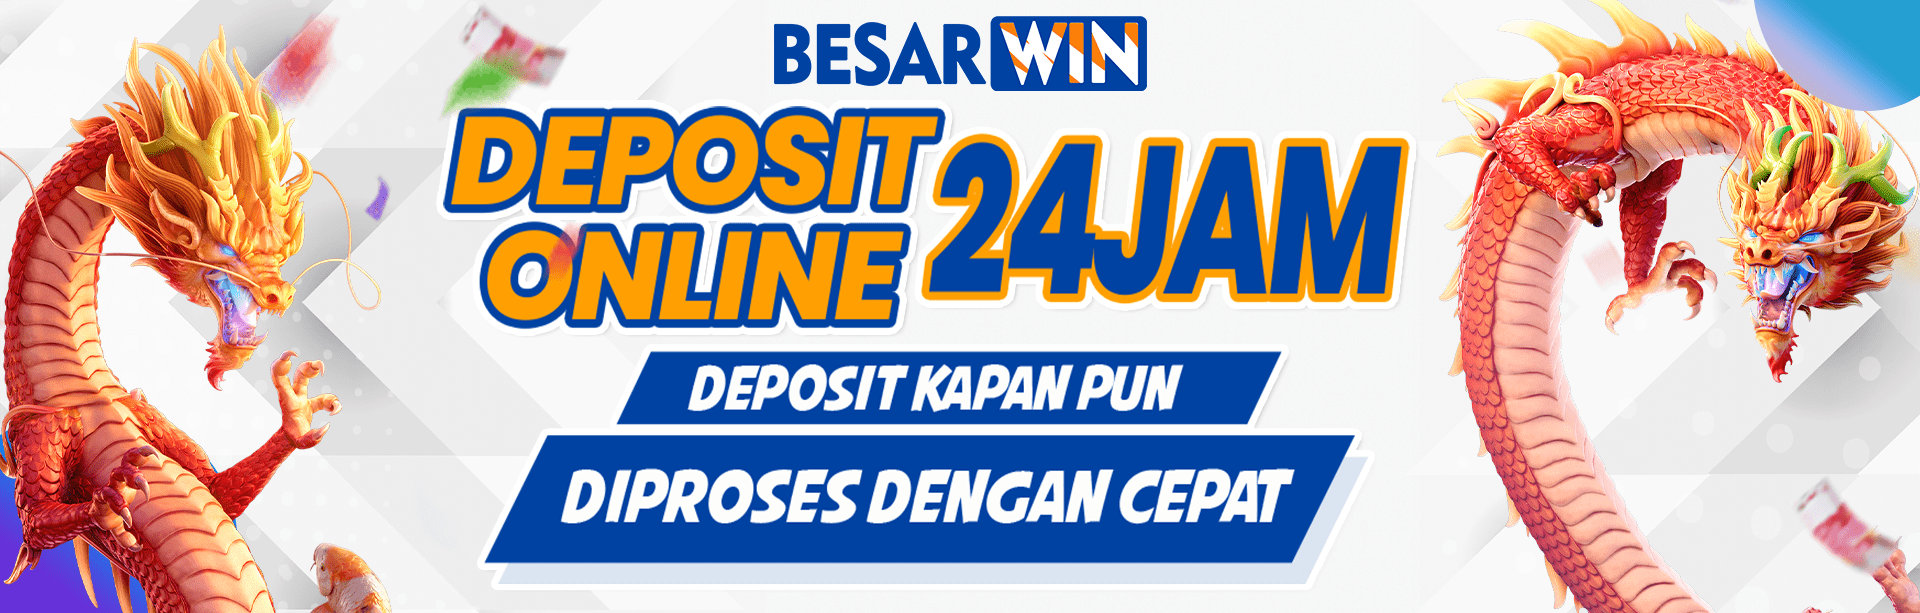 Deposit Online 24 Jam